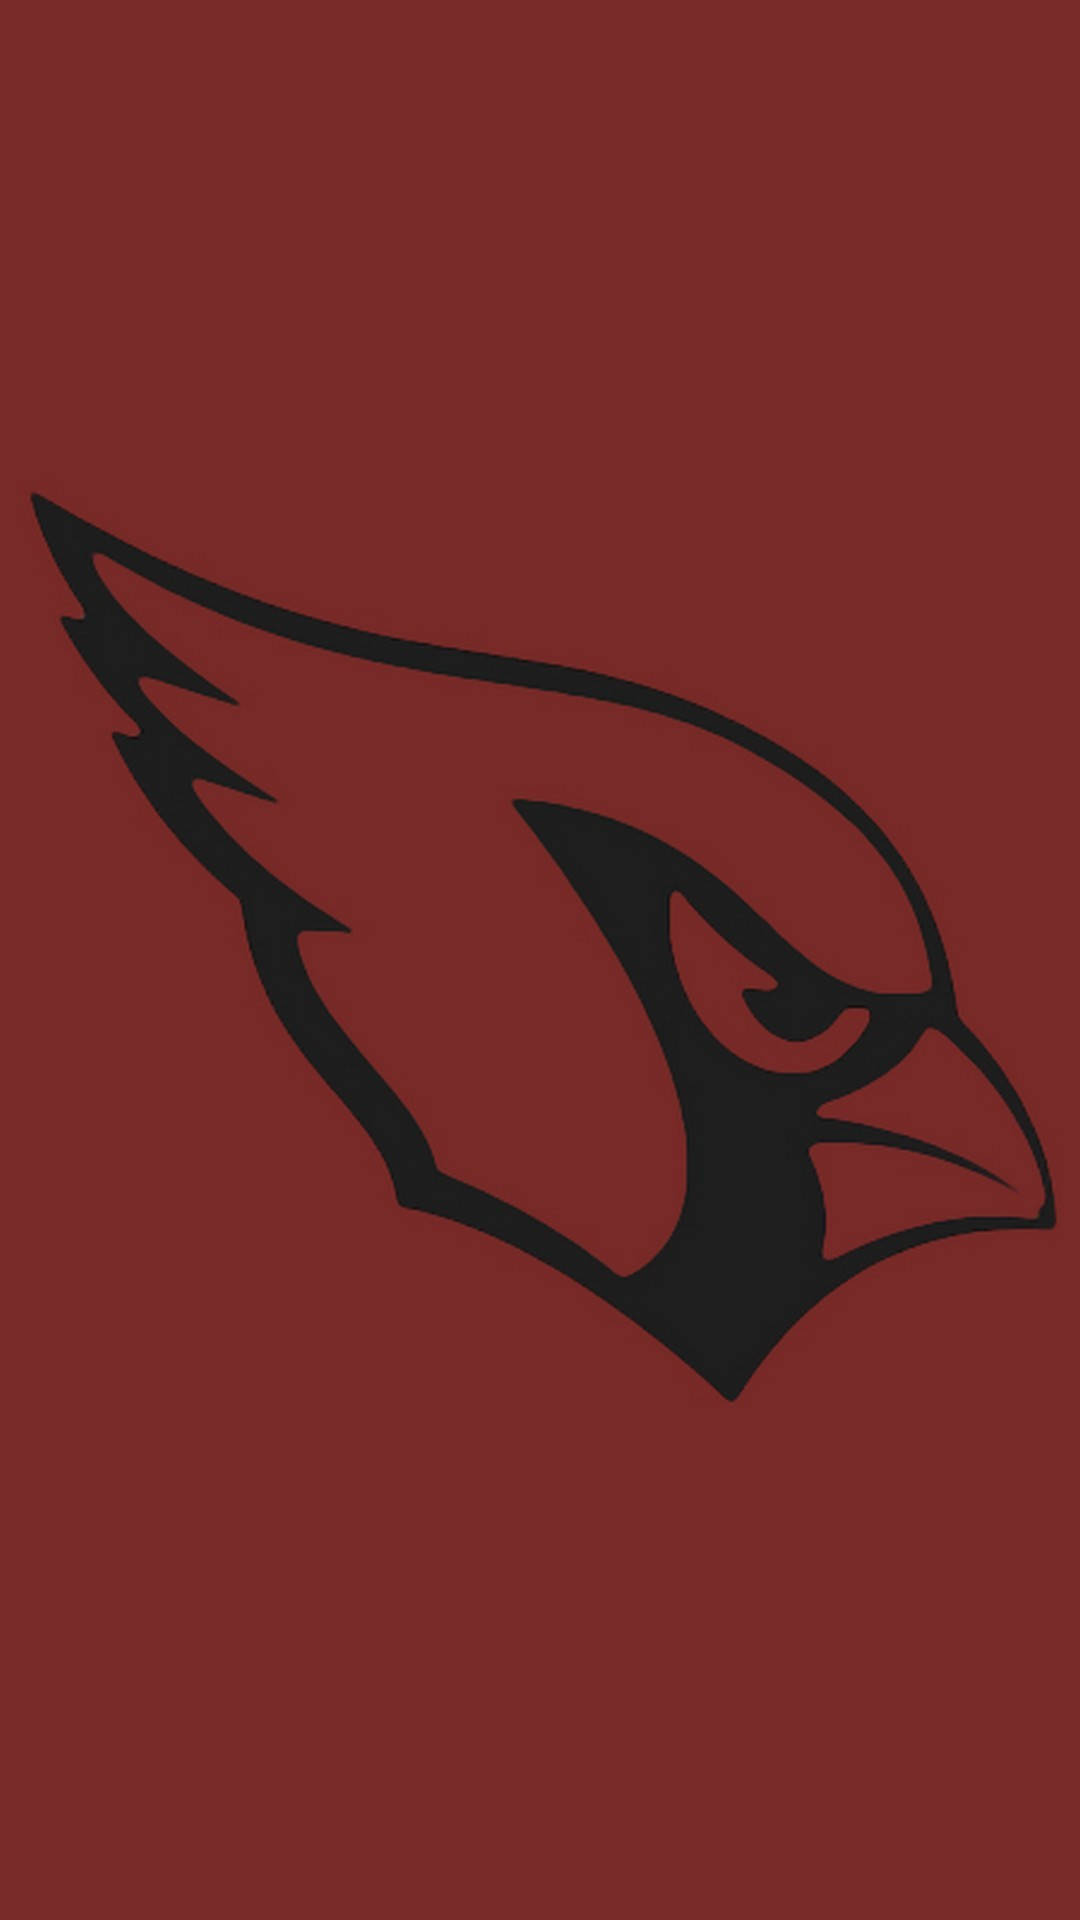 Black And Red Arizona Cardinals Logo Background